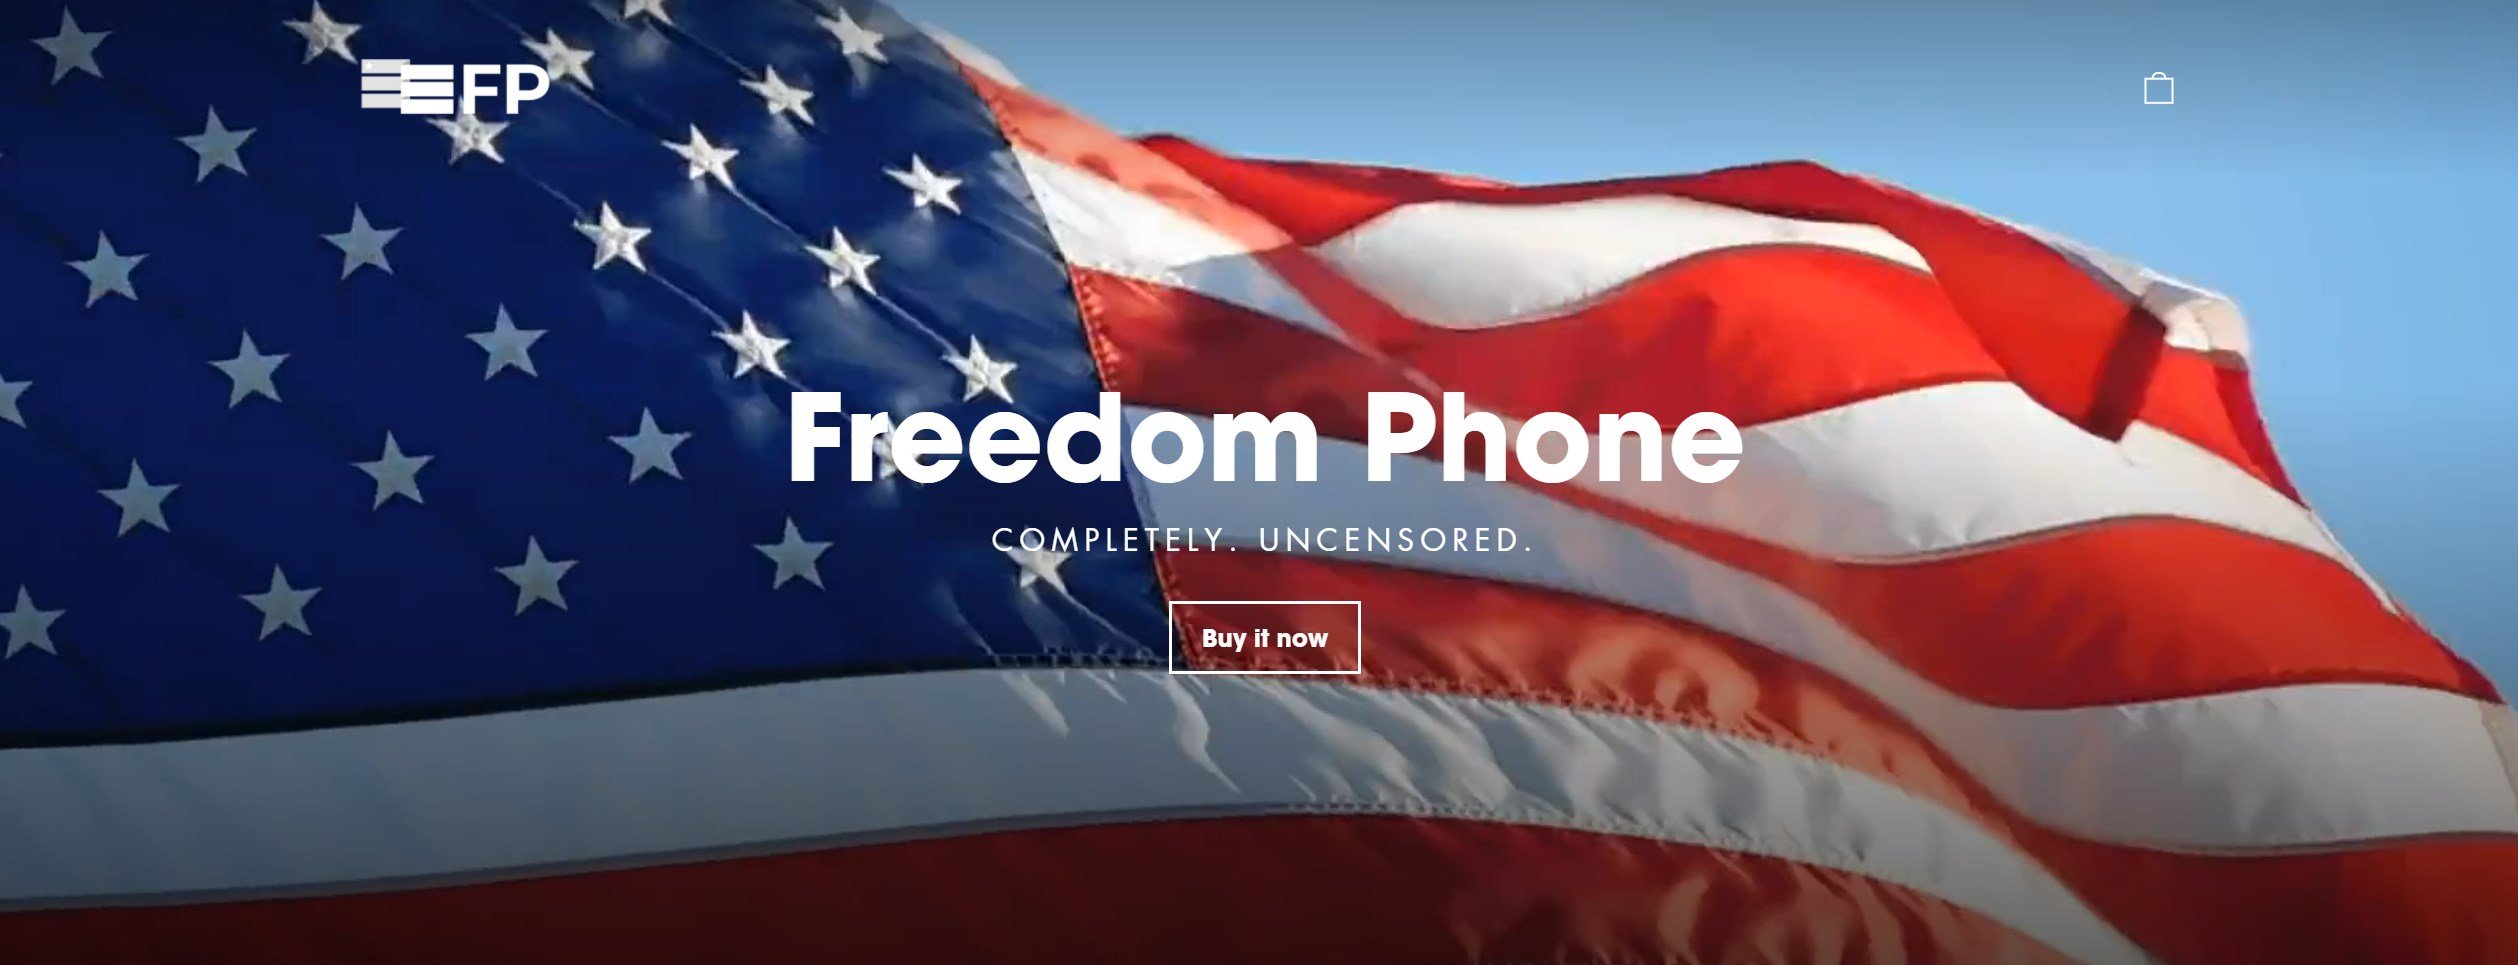 Freedom Phone download.jpeg